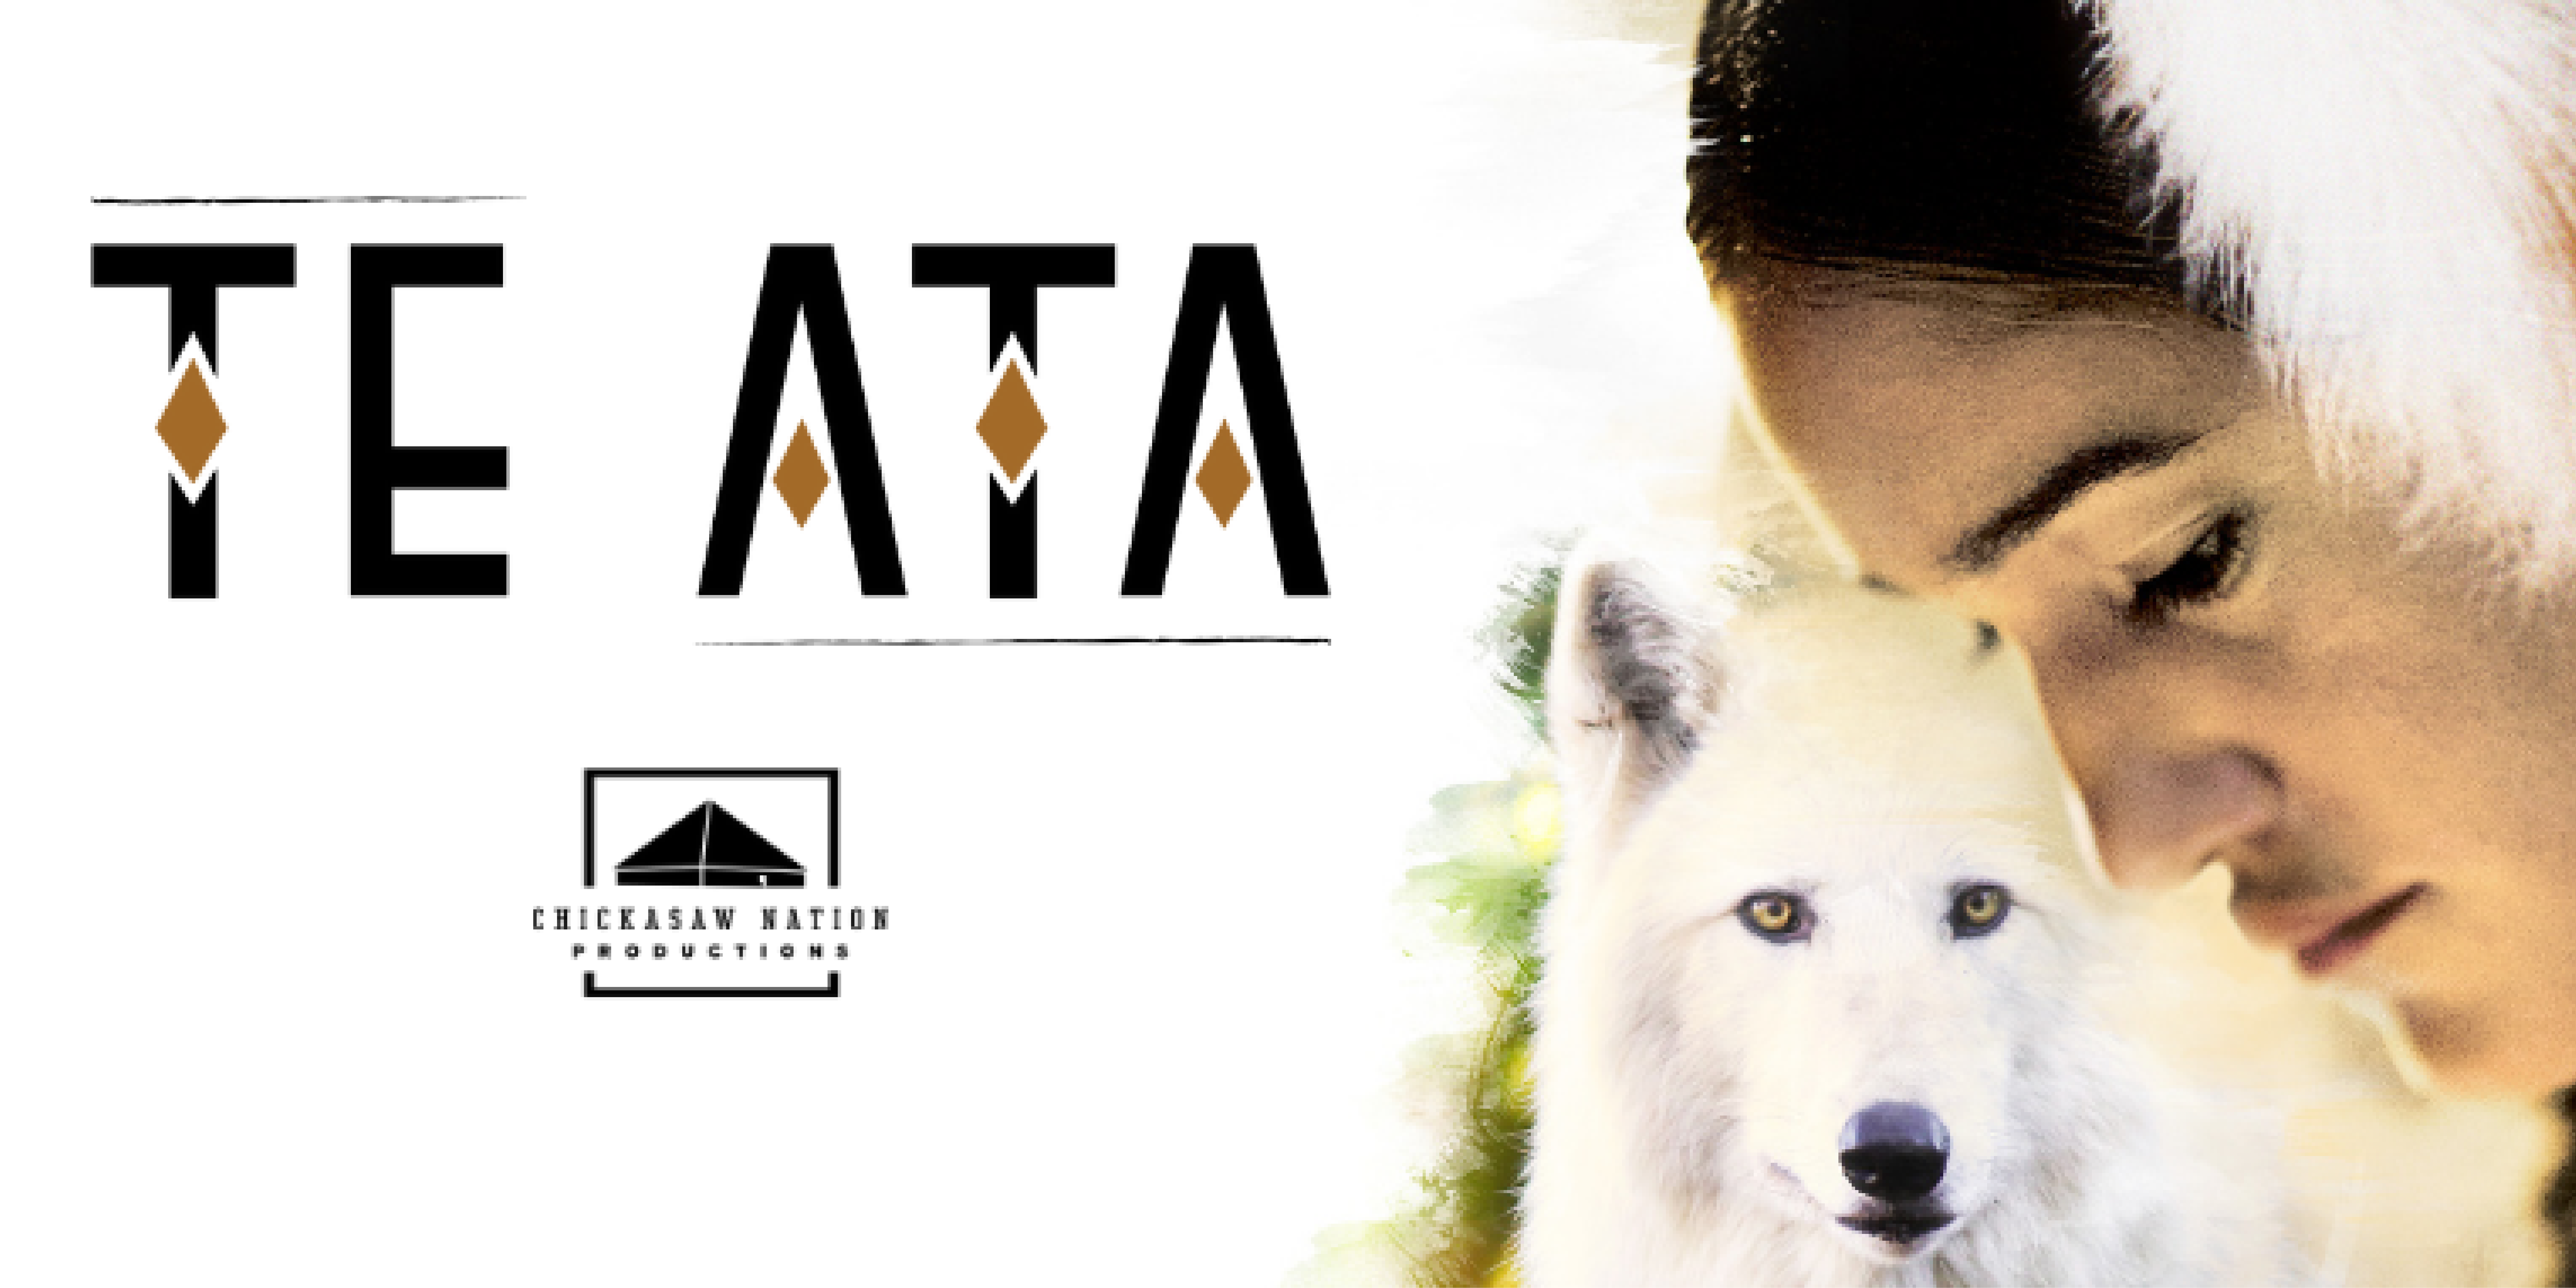 Free presentation of Te Ata at Burton St. Community Center highlights Native American Heritage Month